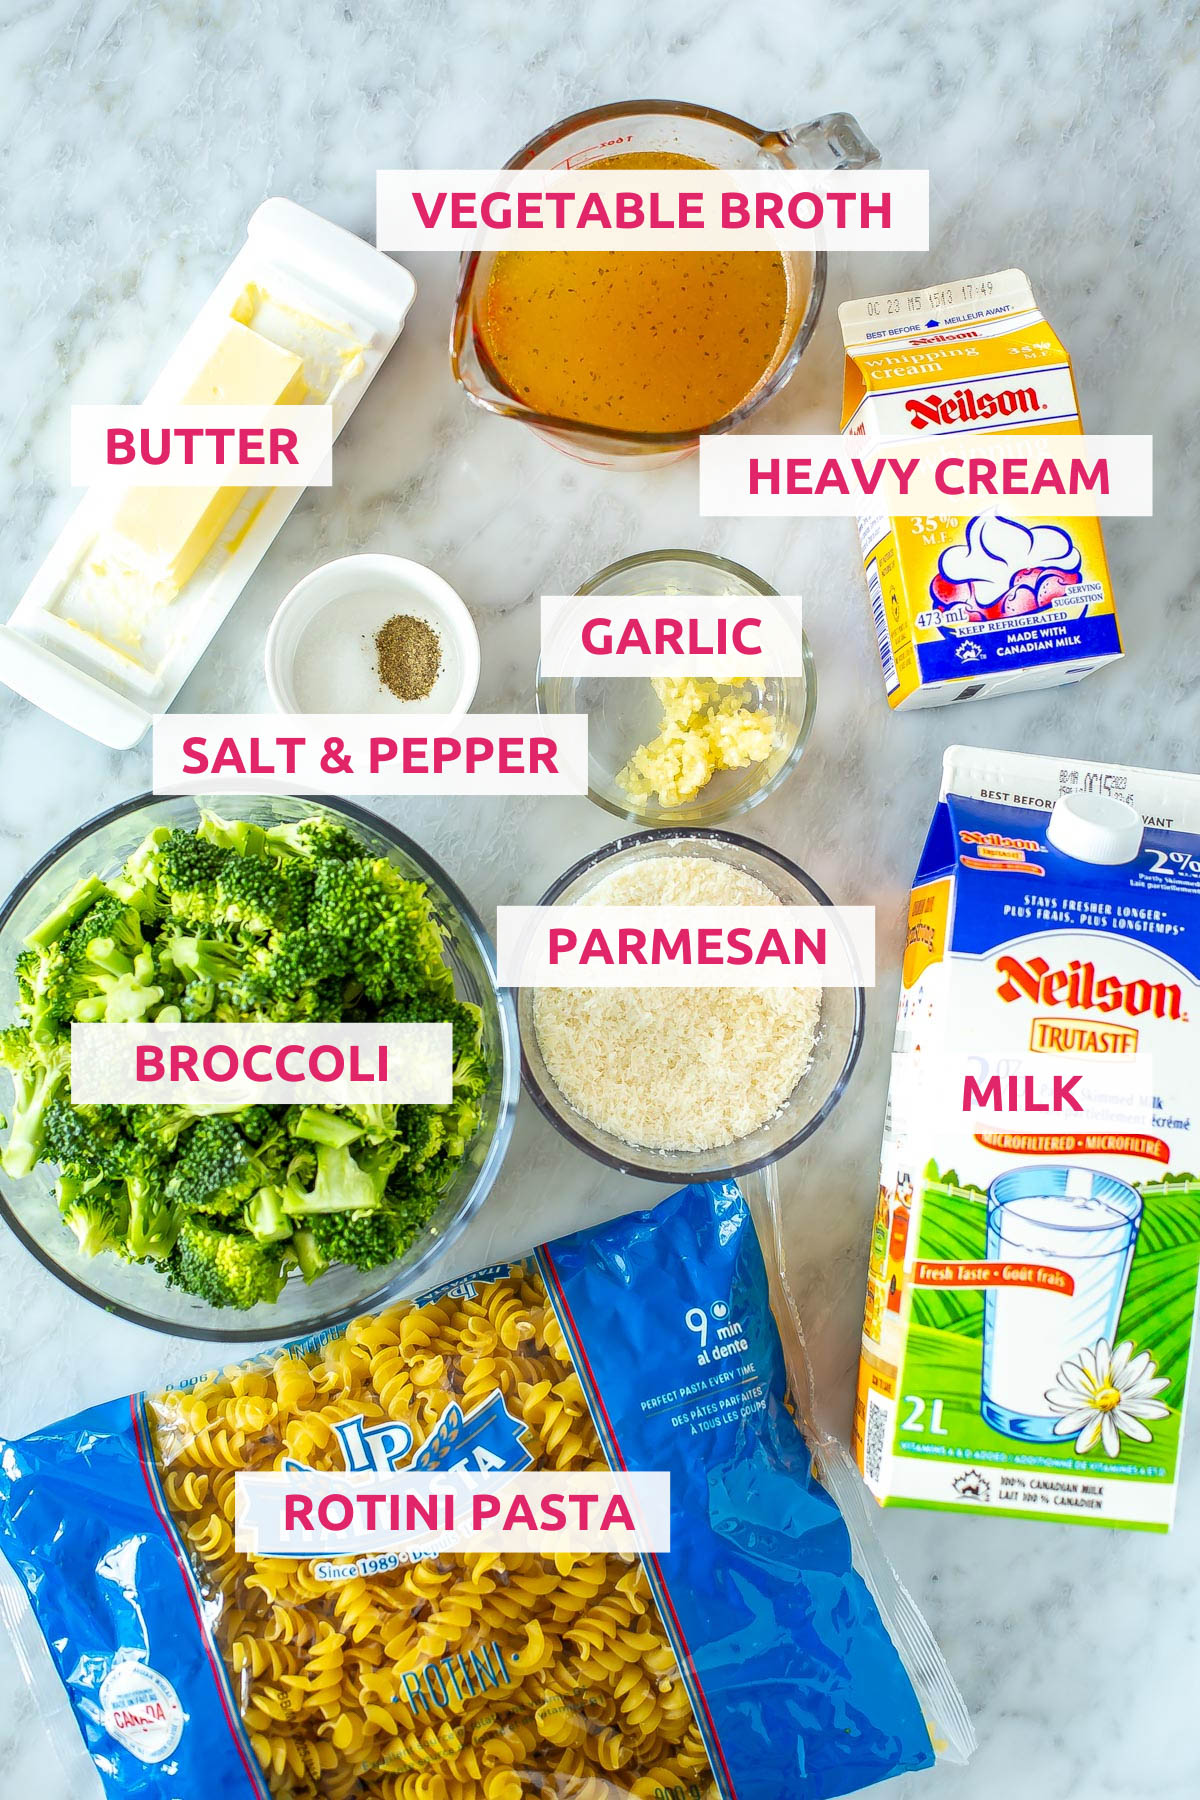 Ingredients for broccoli alfredo pasta: pasta, broccoli, butter, vegetable borth, salt, pepper, garlic, parmesan cheese, milk and heavy cream.